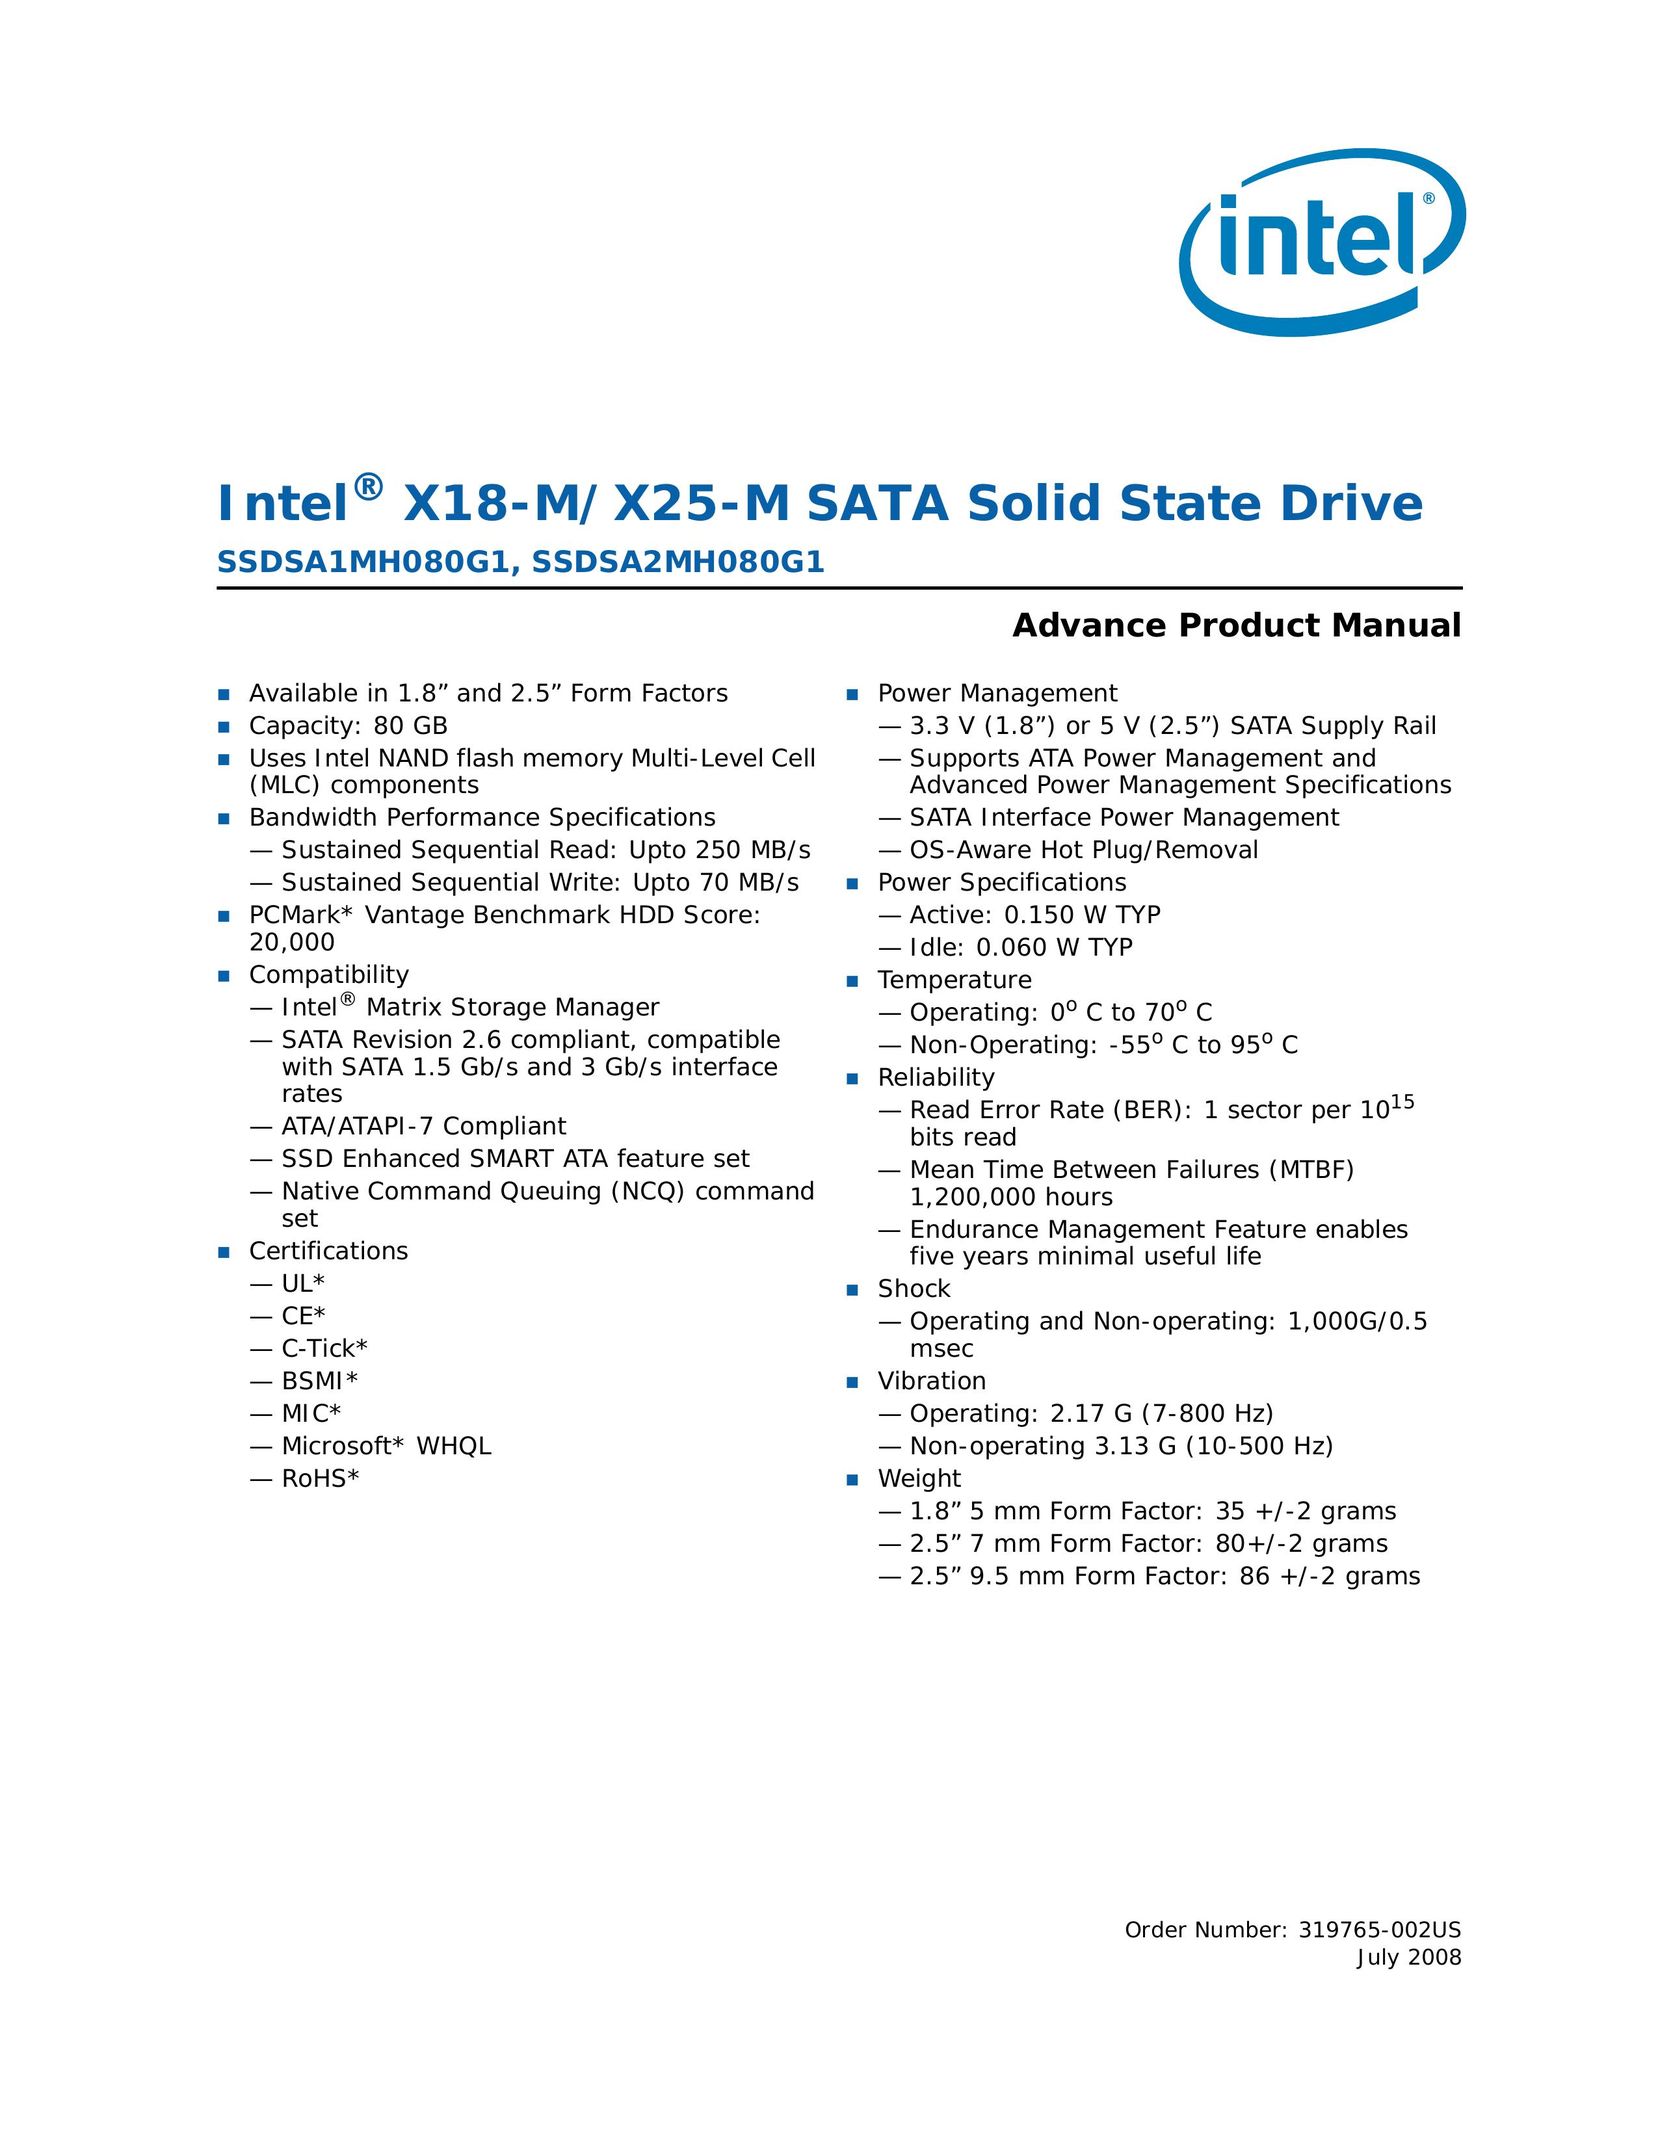 Intel X25-M Computer Drive User Manual